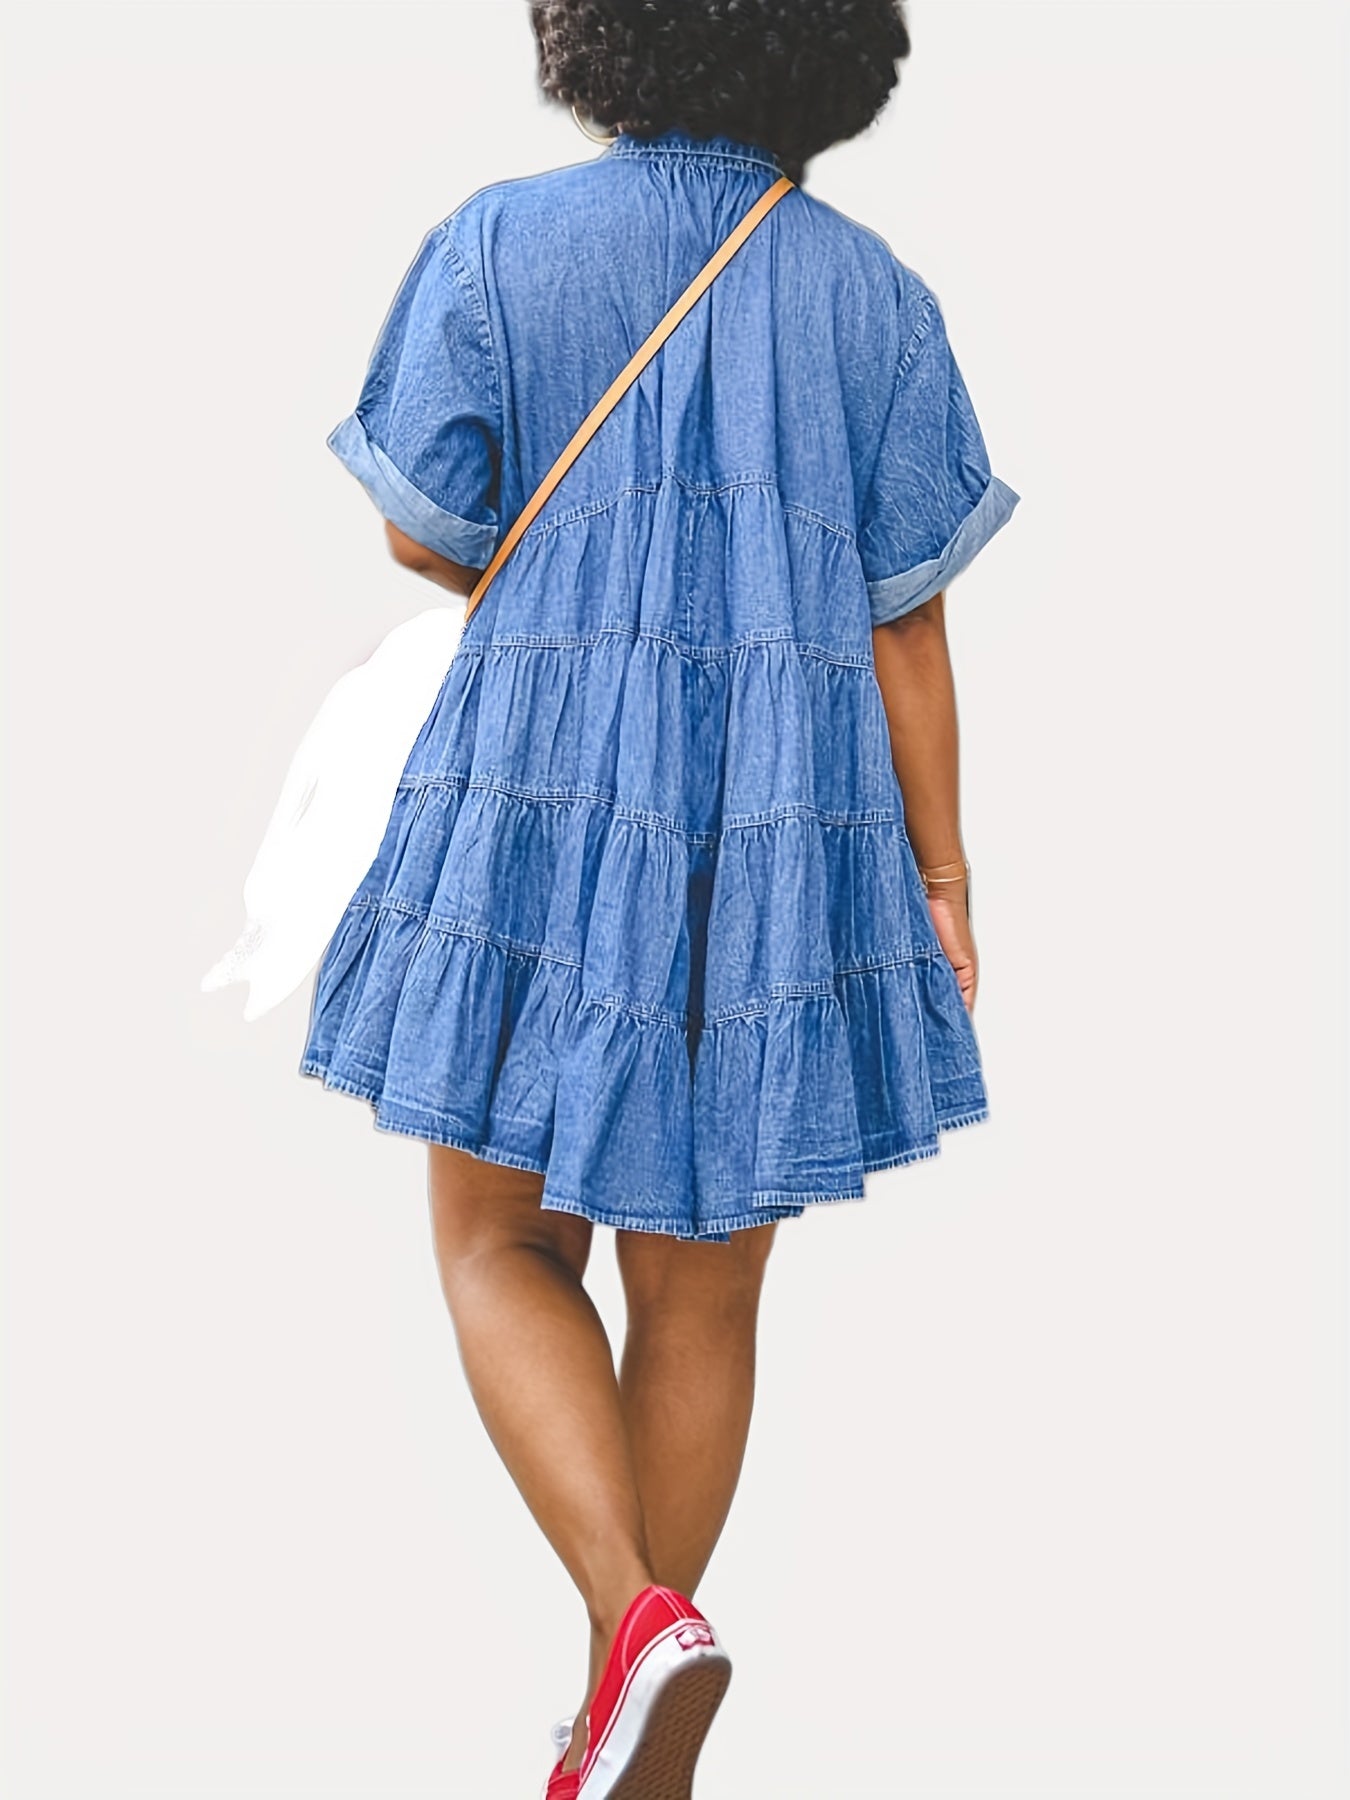 Lovevop-Dark Blue Short Sleeves Denim Dress, Tiered Babydoll Single-Breasted Button Lapel Denim Dress, Women's Denim Clothing